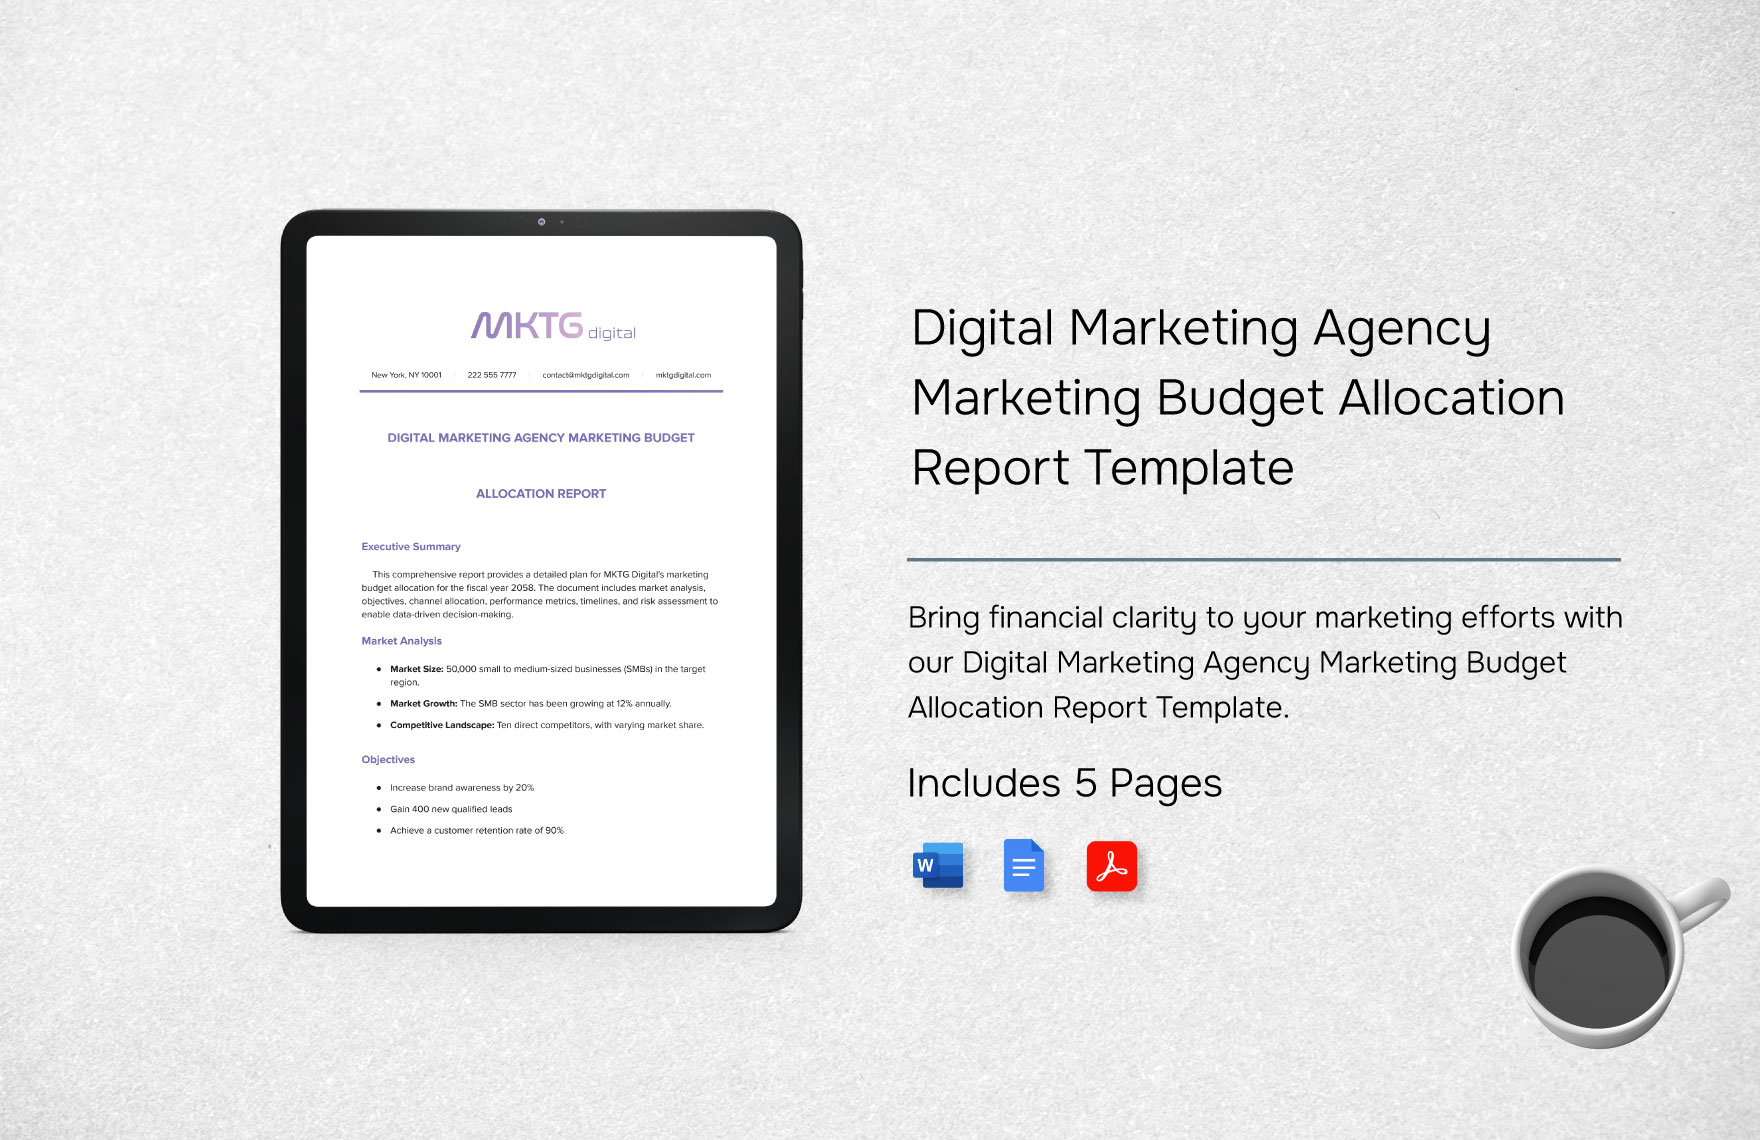 Digital Marketing Agency Marketing Budget Allocation Report Template